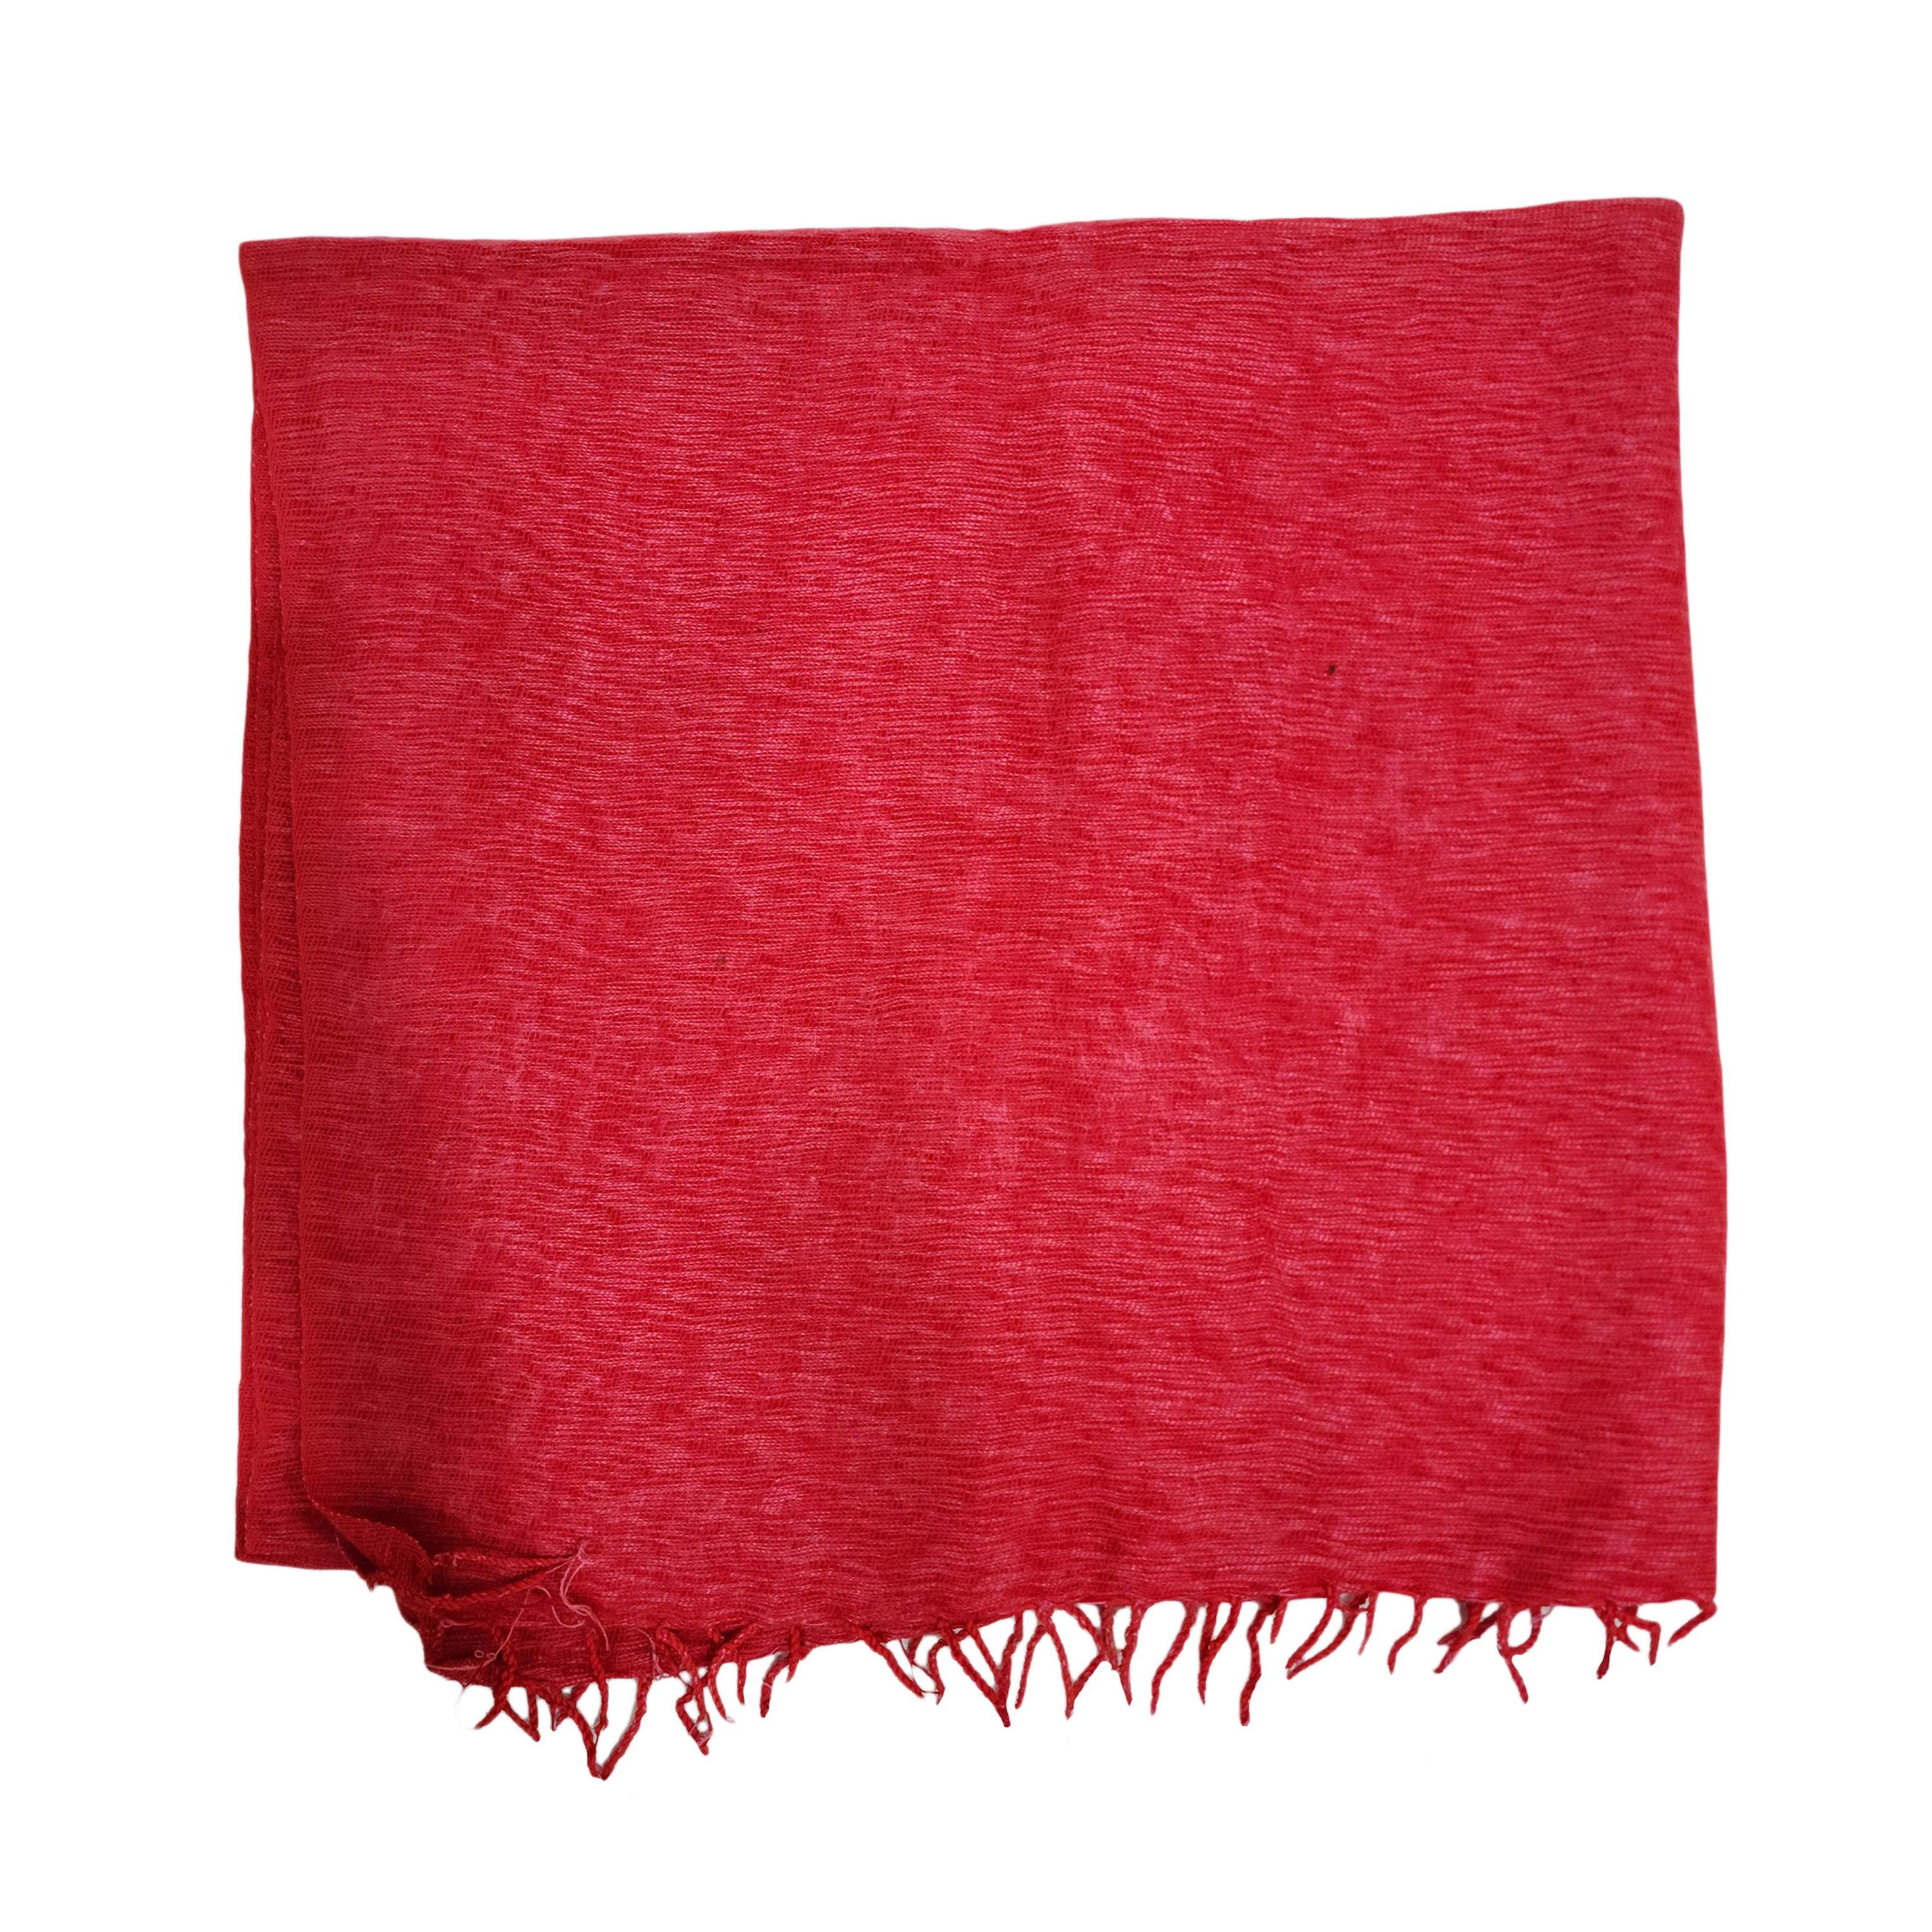 Yak Wool Blanket, Nepali Acrylic Hand Loom Blanket, Color maroon